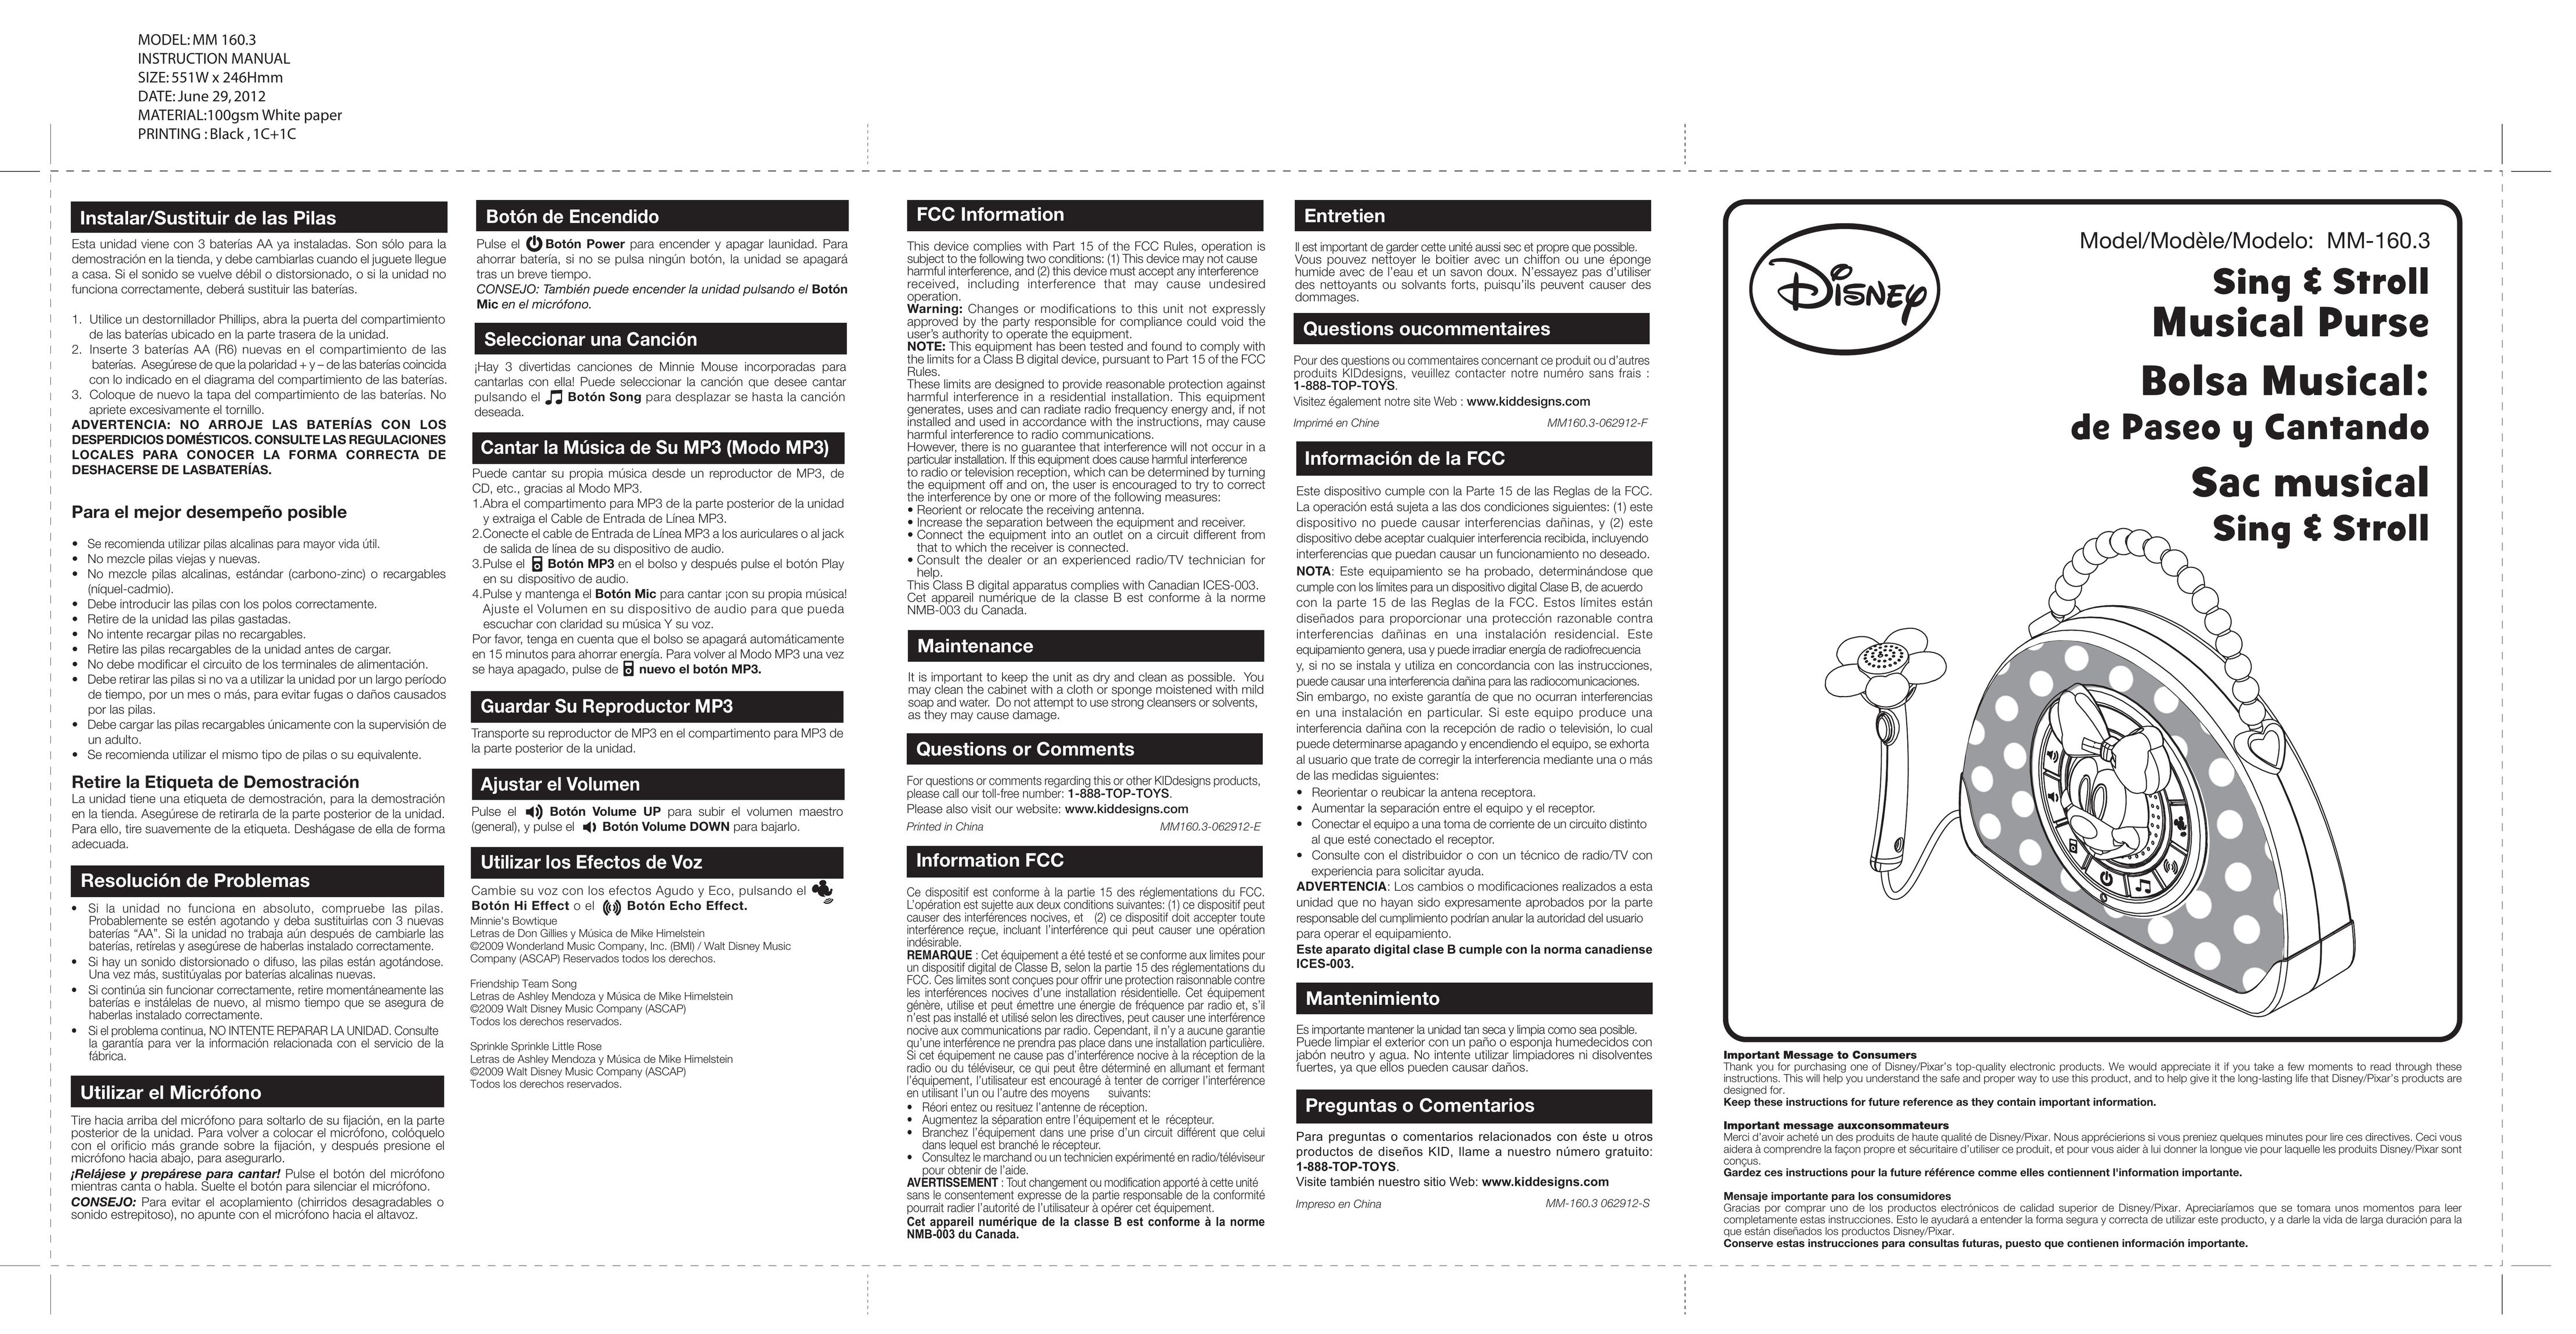 Disney MM 160.3 Baby Toy User Manual